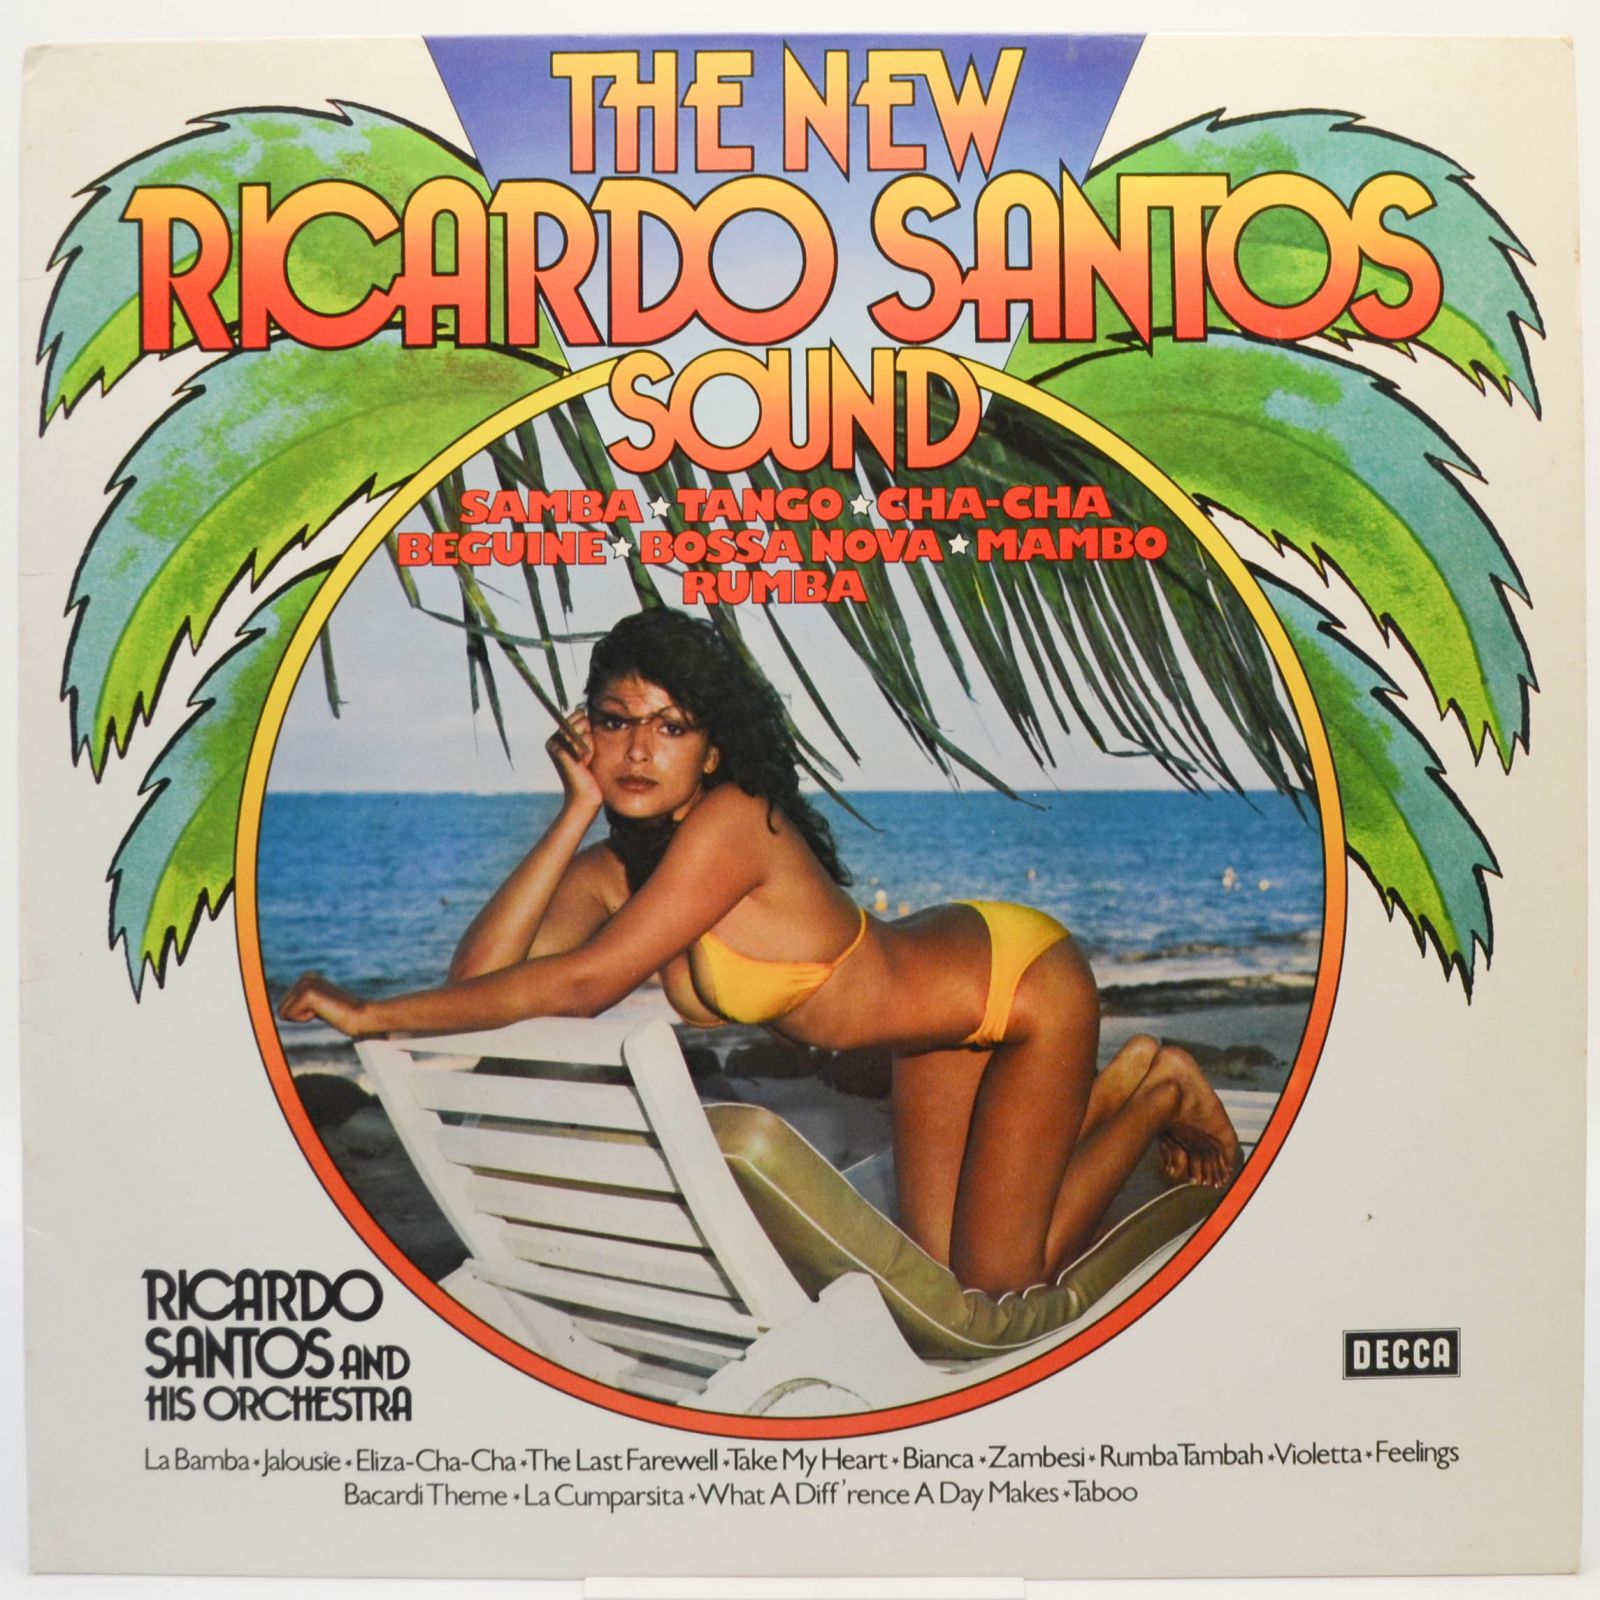 Ricardo Santos And His Orchestra — The New Ricardo Santos Sound, 1976